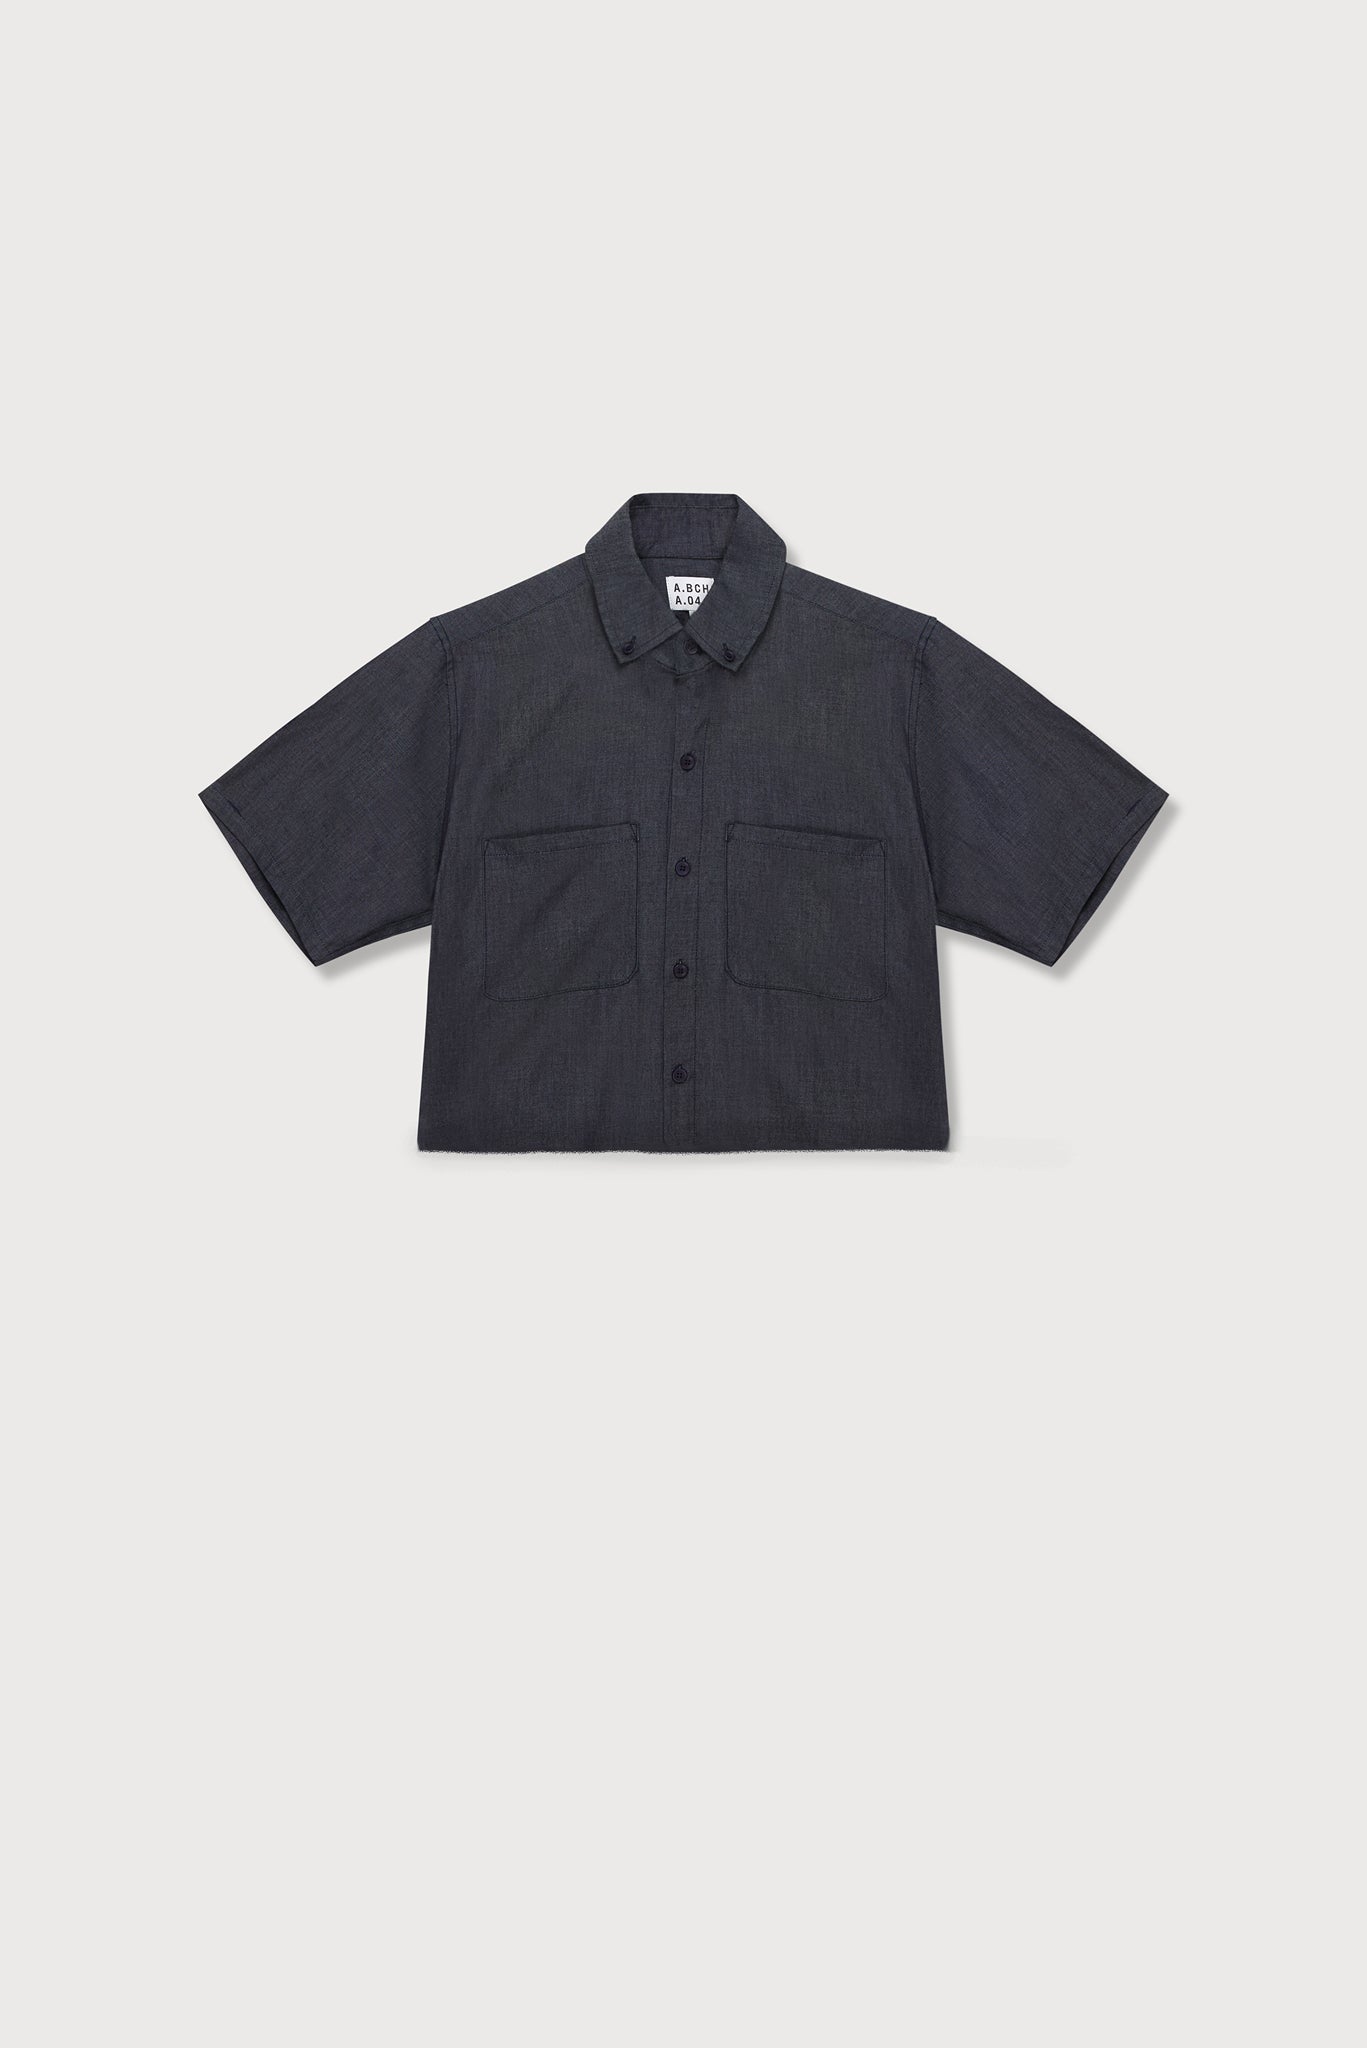 A.04 Dark Indigo Cropped Button Down Shirt in Organic Cotton